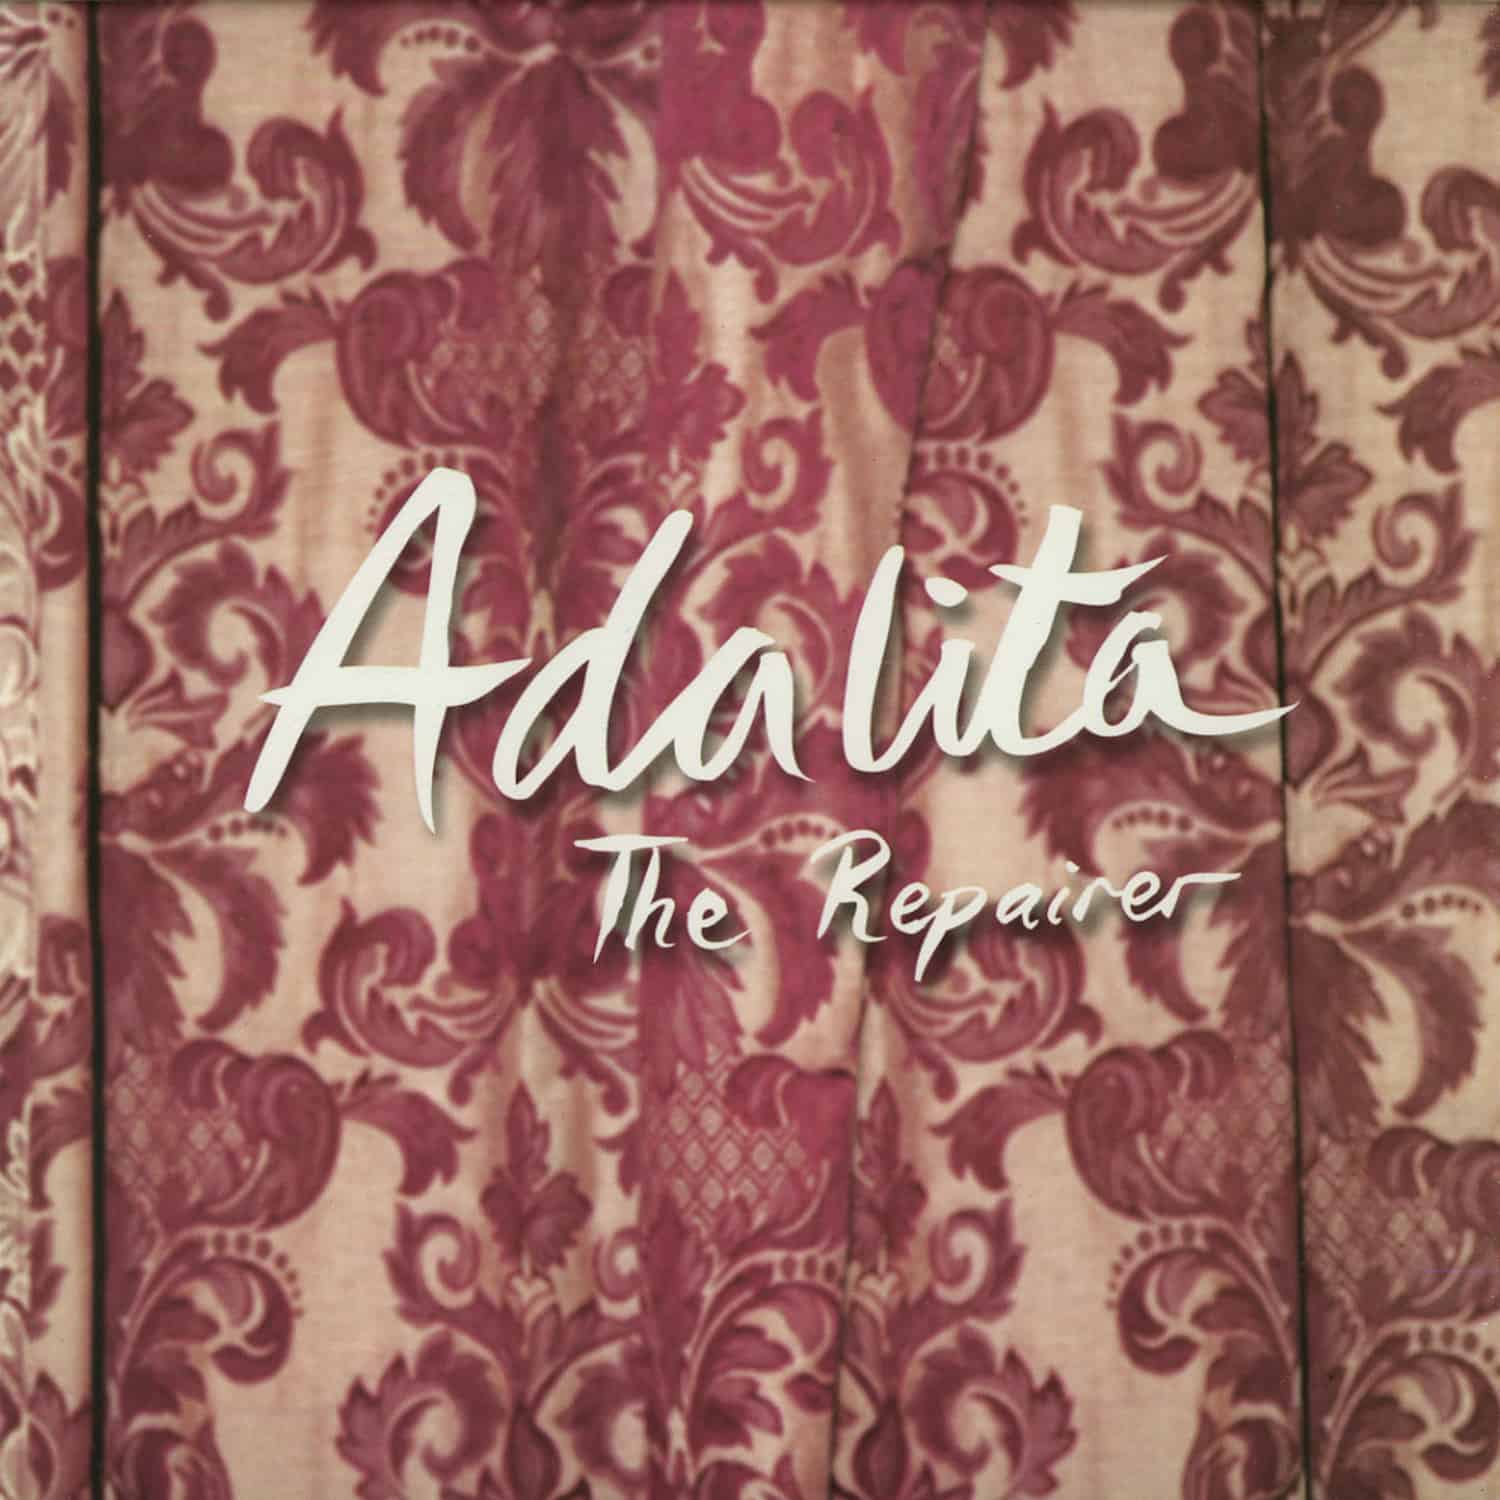 Adalita - THE REPAIRER 